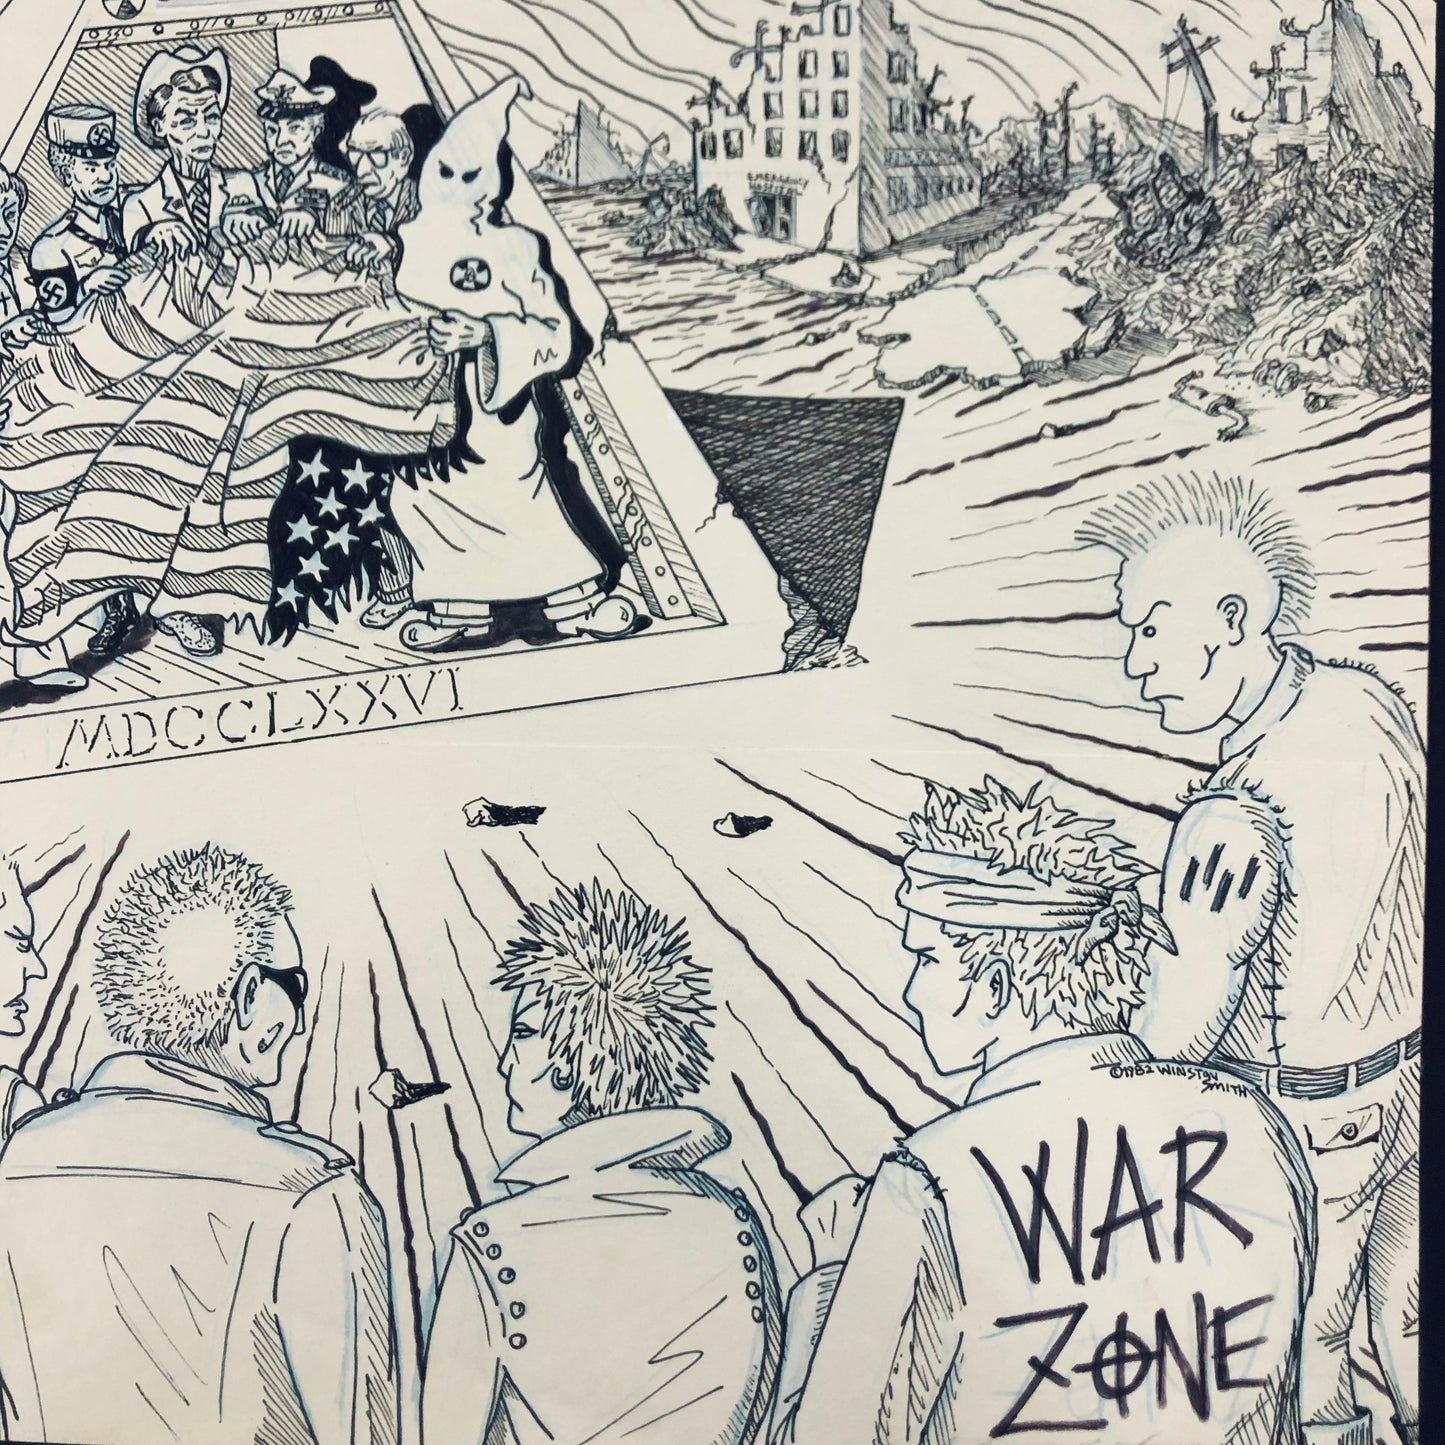 Winston Smith "War Zone" (1982) Drawing